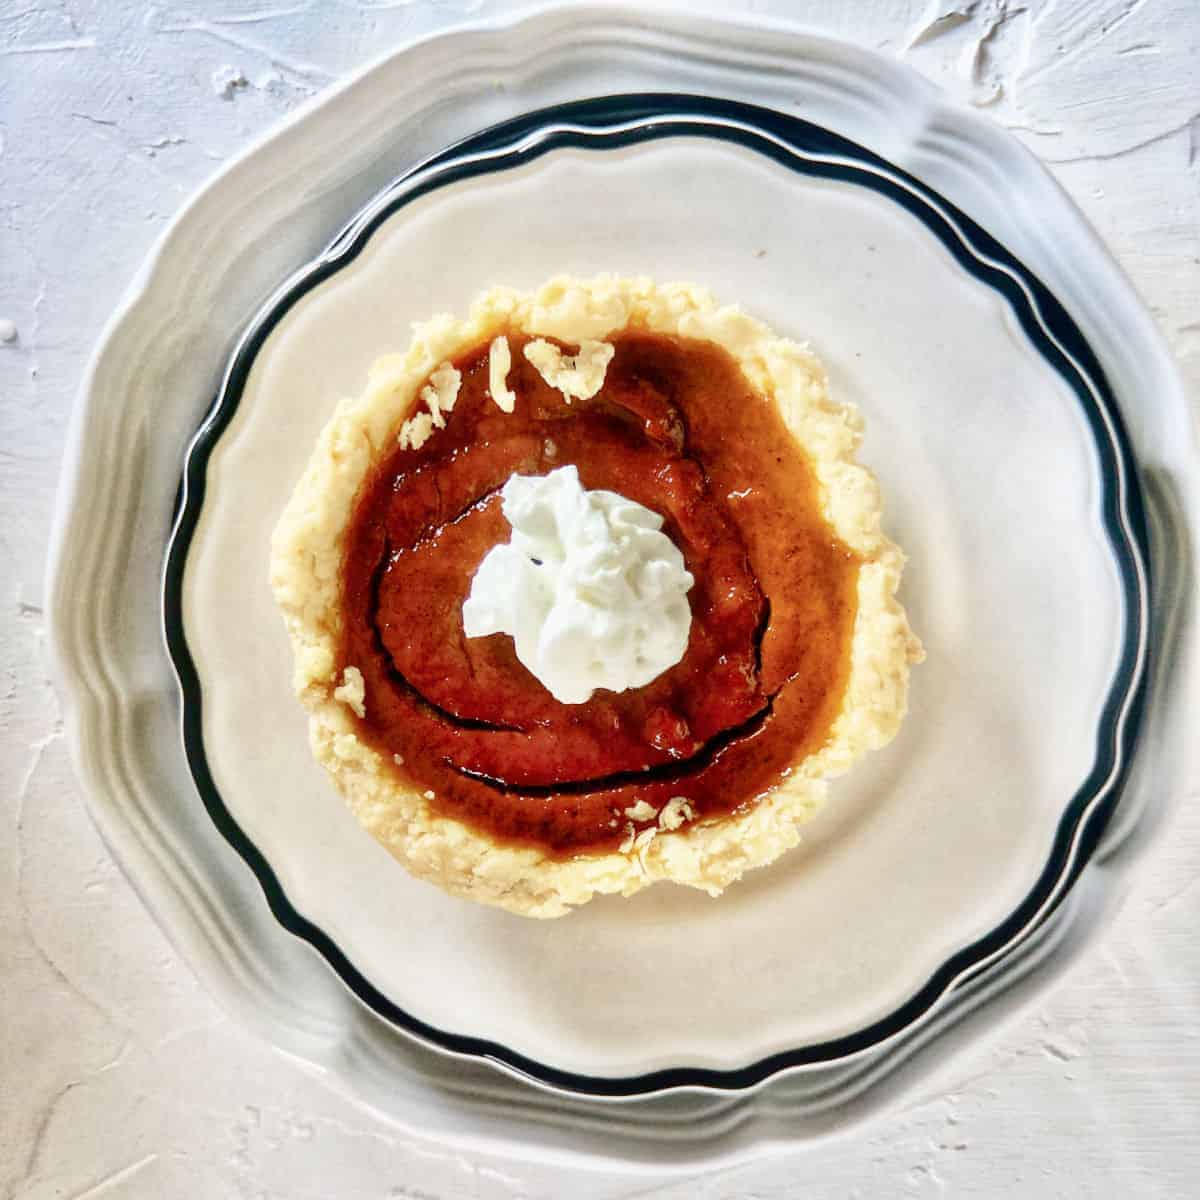 Homemade mini pumpkin pie topped with whipped cream.